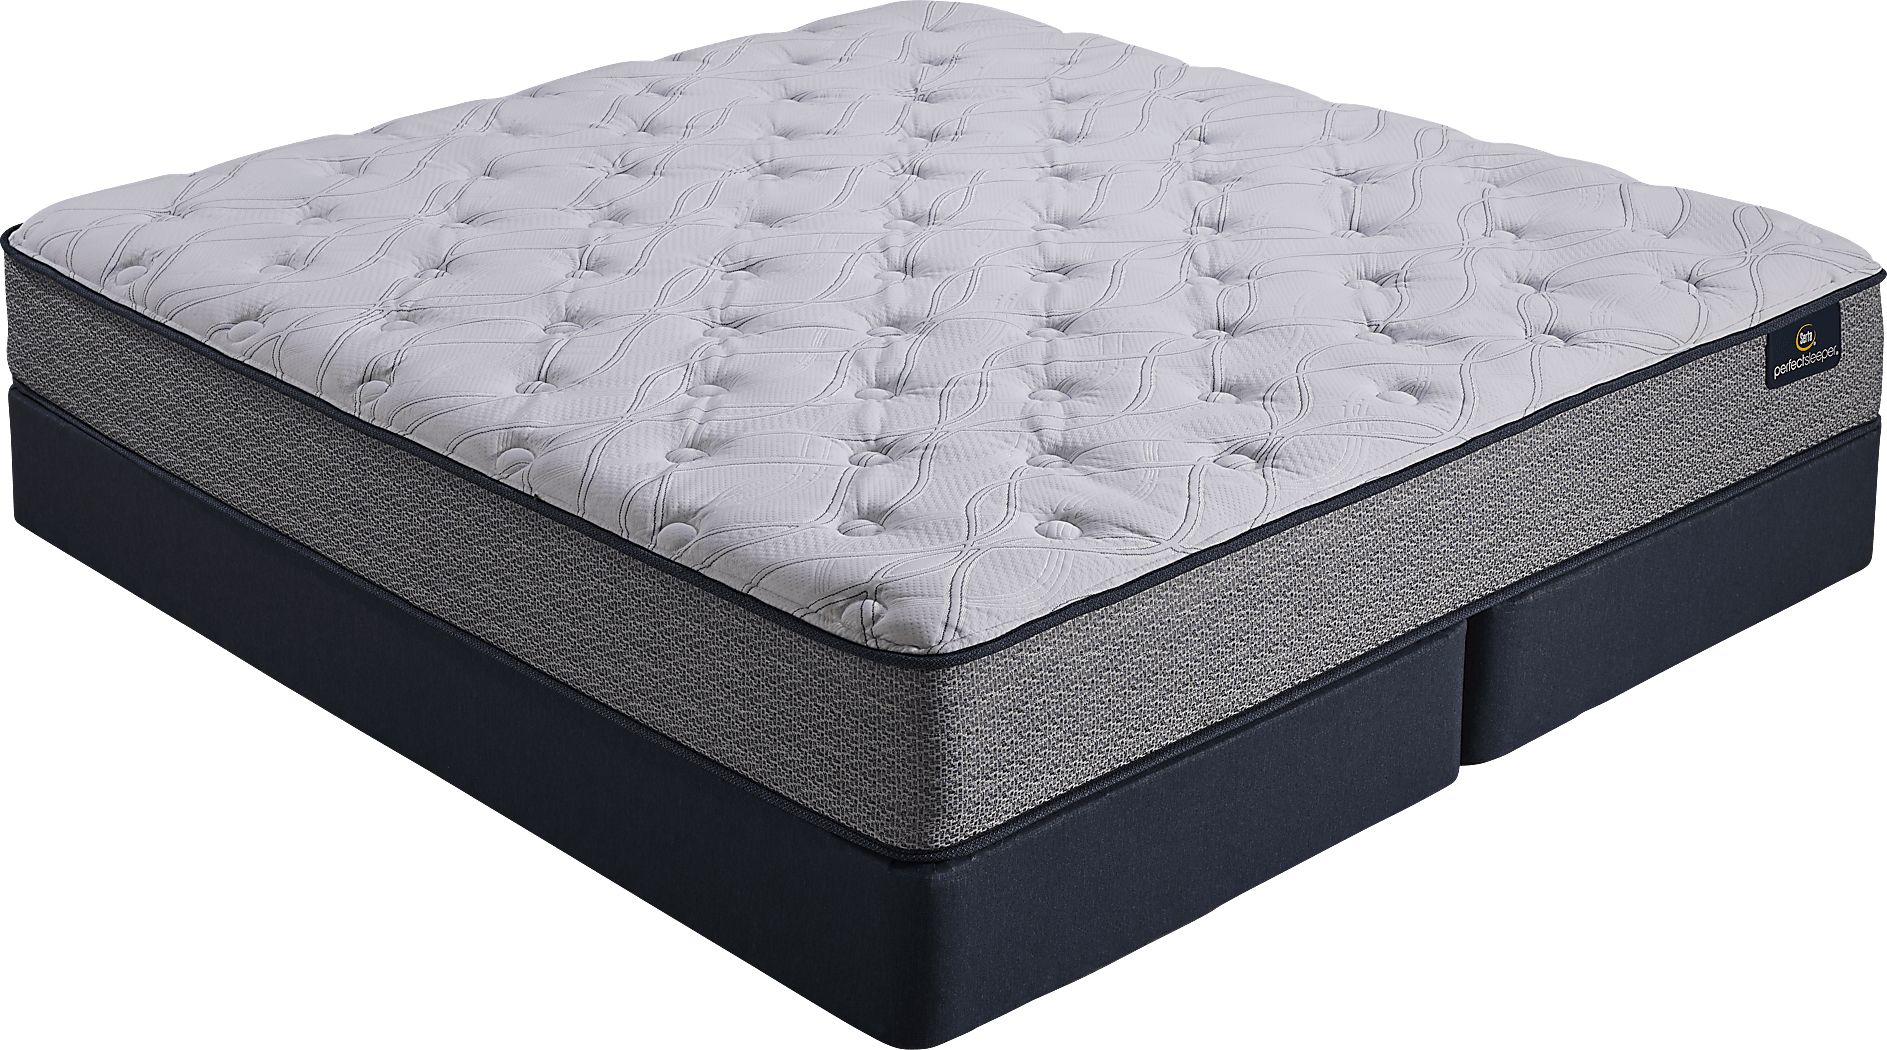 serta perfect sleeper elite percevall mattress review